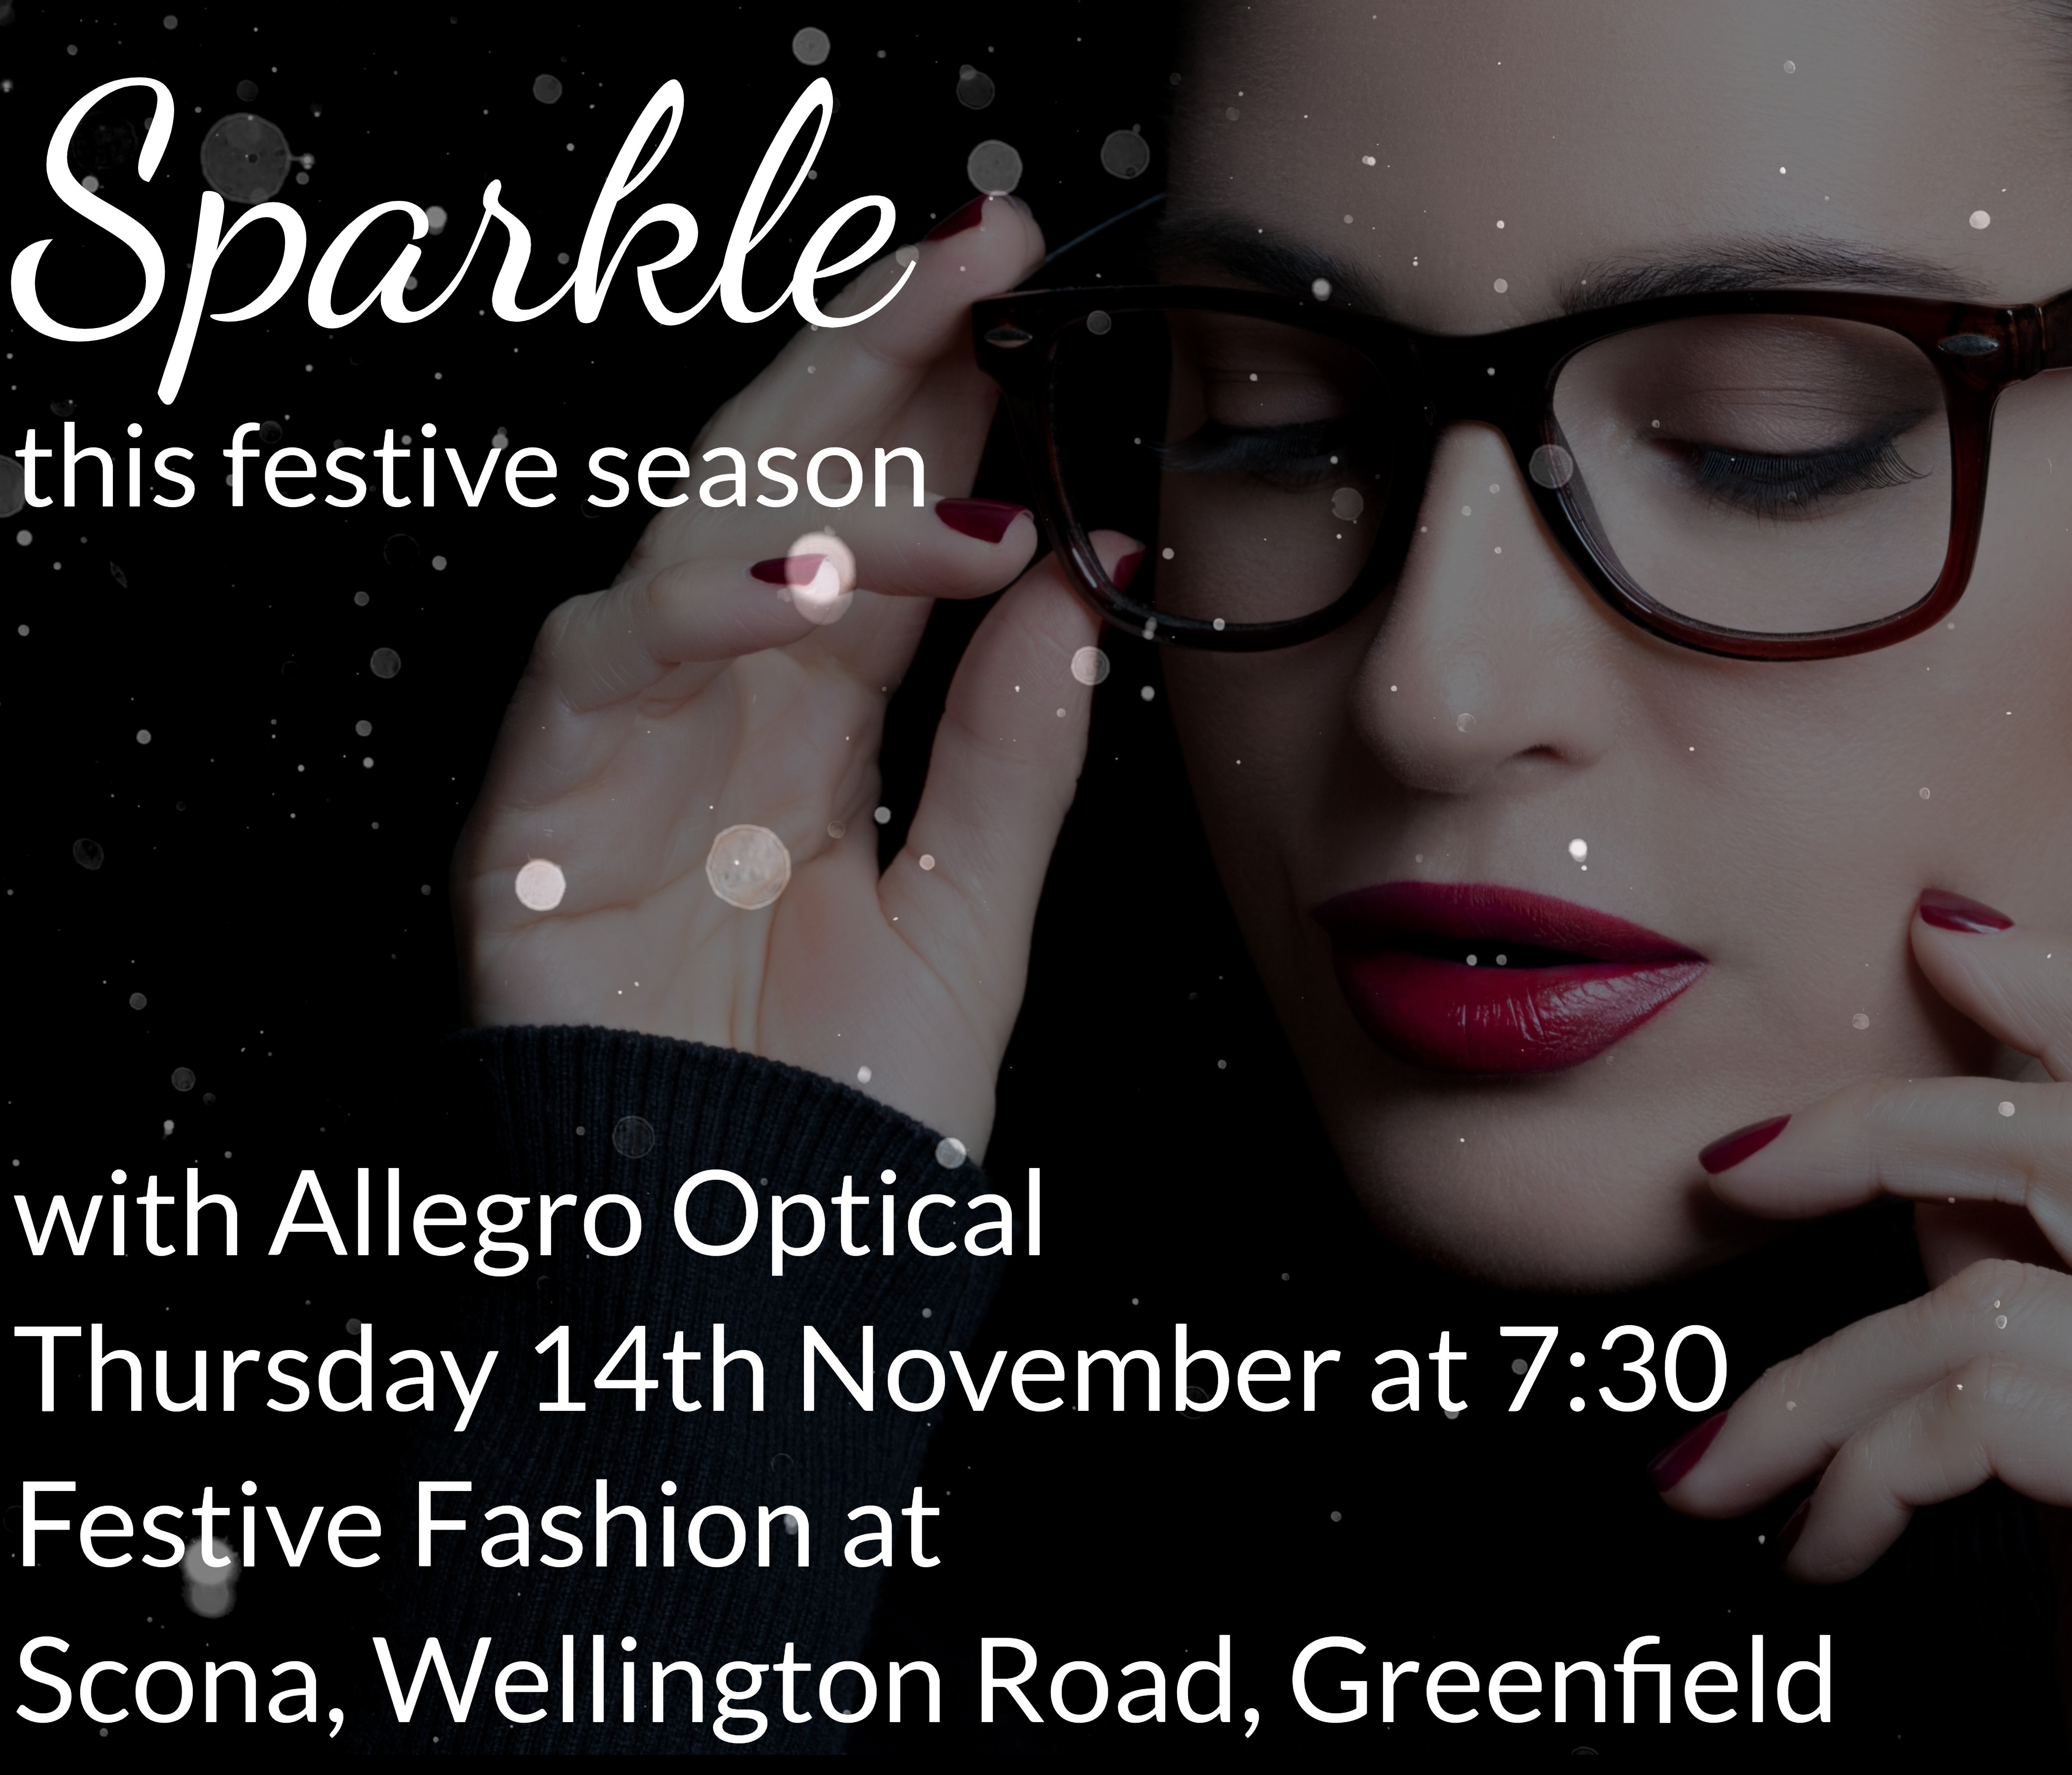 Sparkle event ALlegro Optical at Scona 14th November 2019